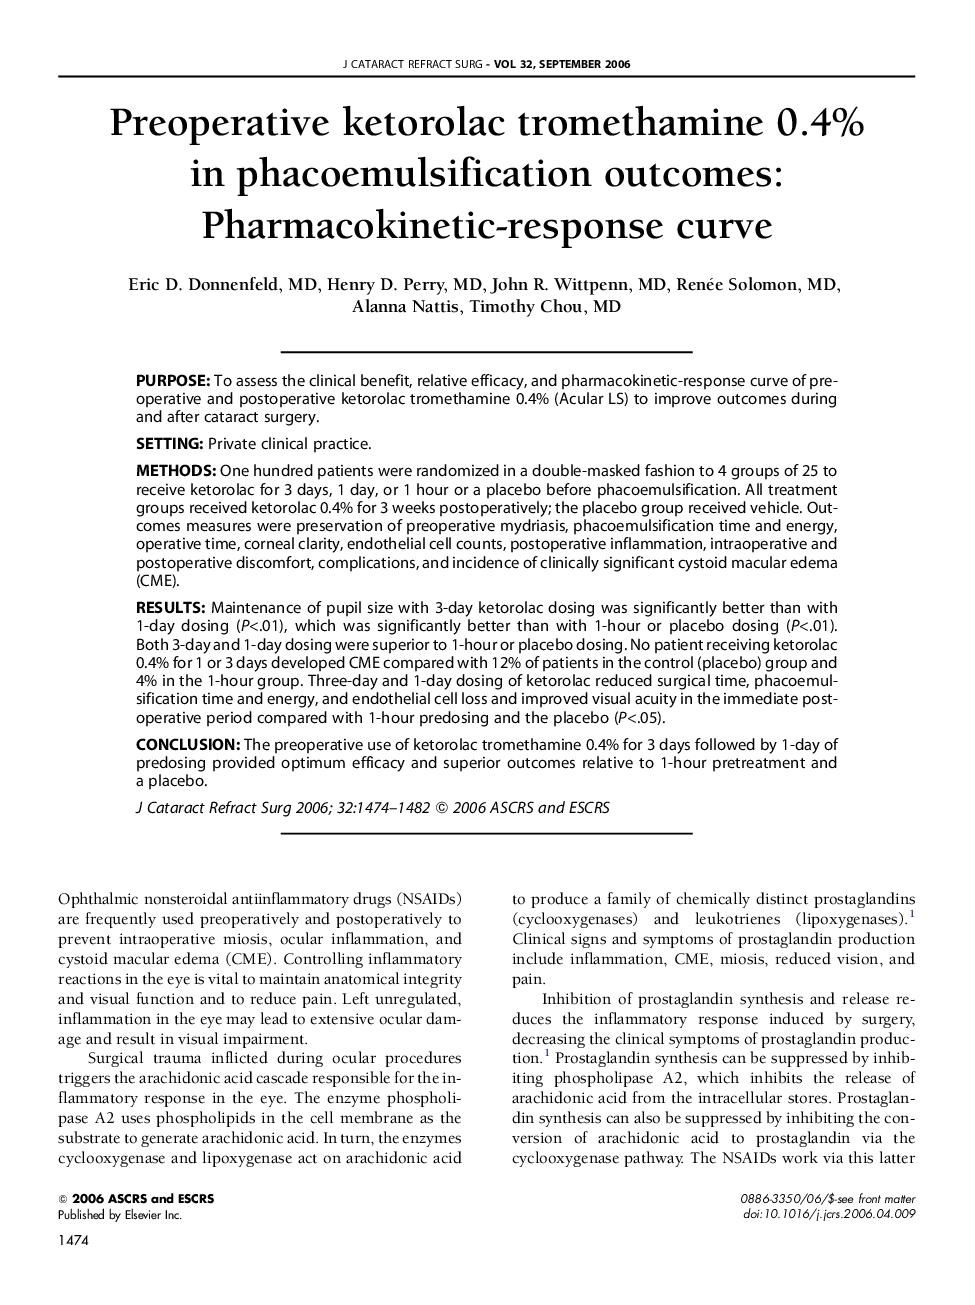 Preoperative ketorolac tromethamine 0.4% in phacoemulsification outcomes: Pharmacokinetic-response curve